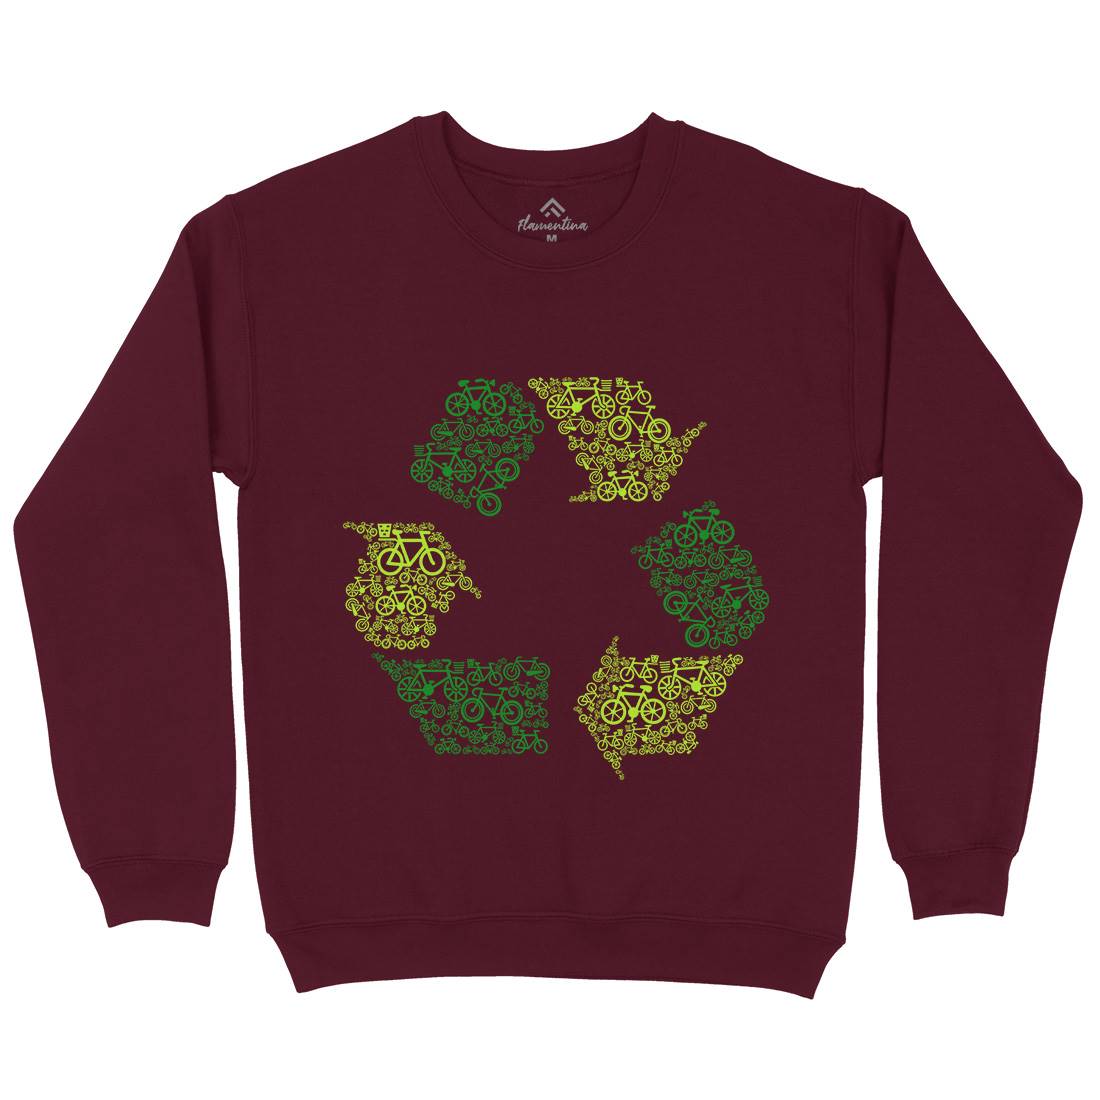 Recycling Kids Crew Neck Sweatshirt Retro B071